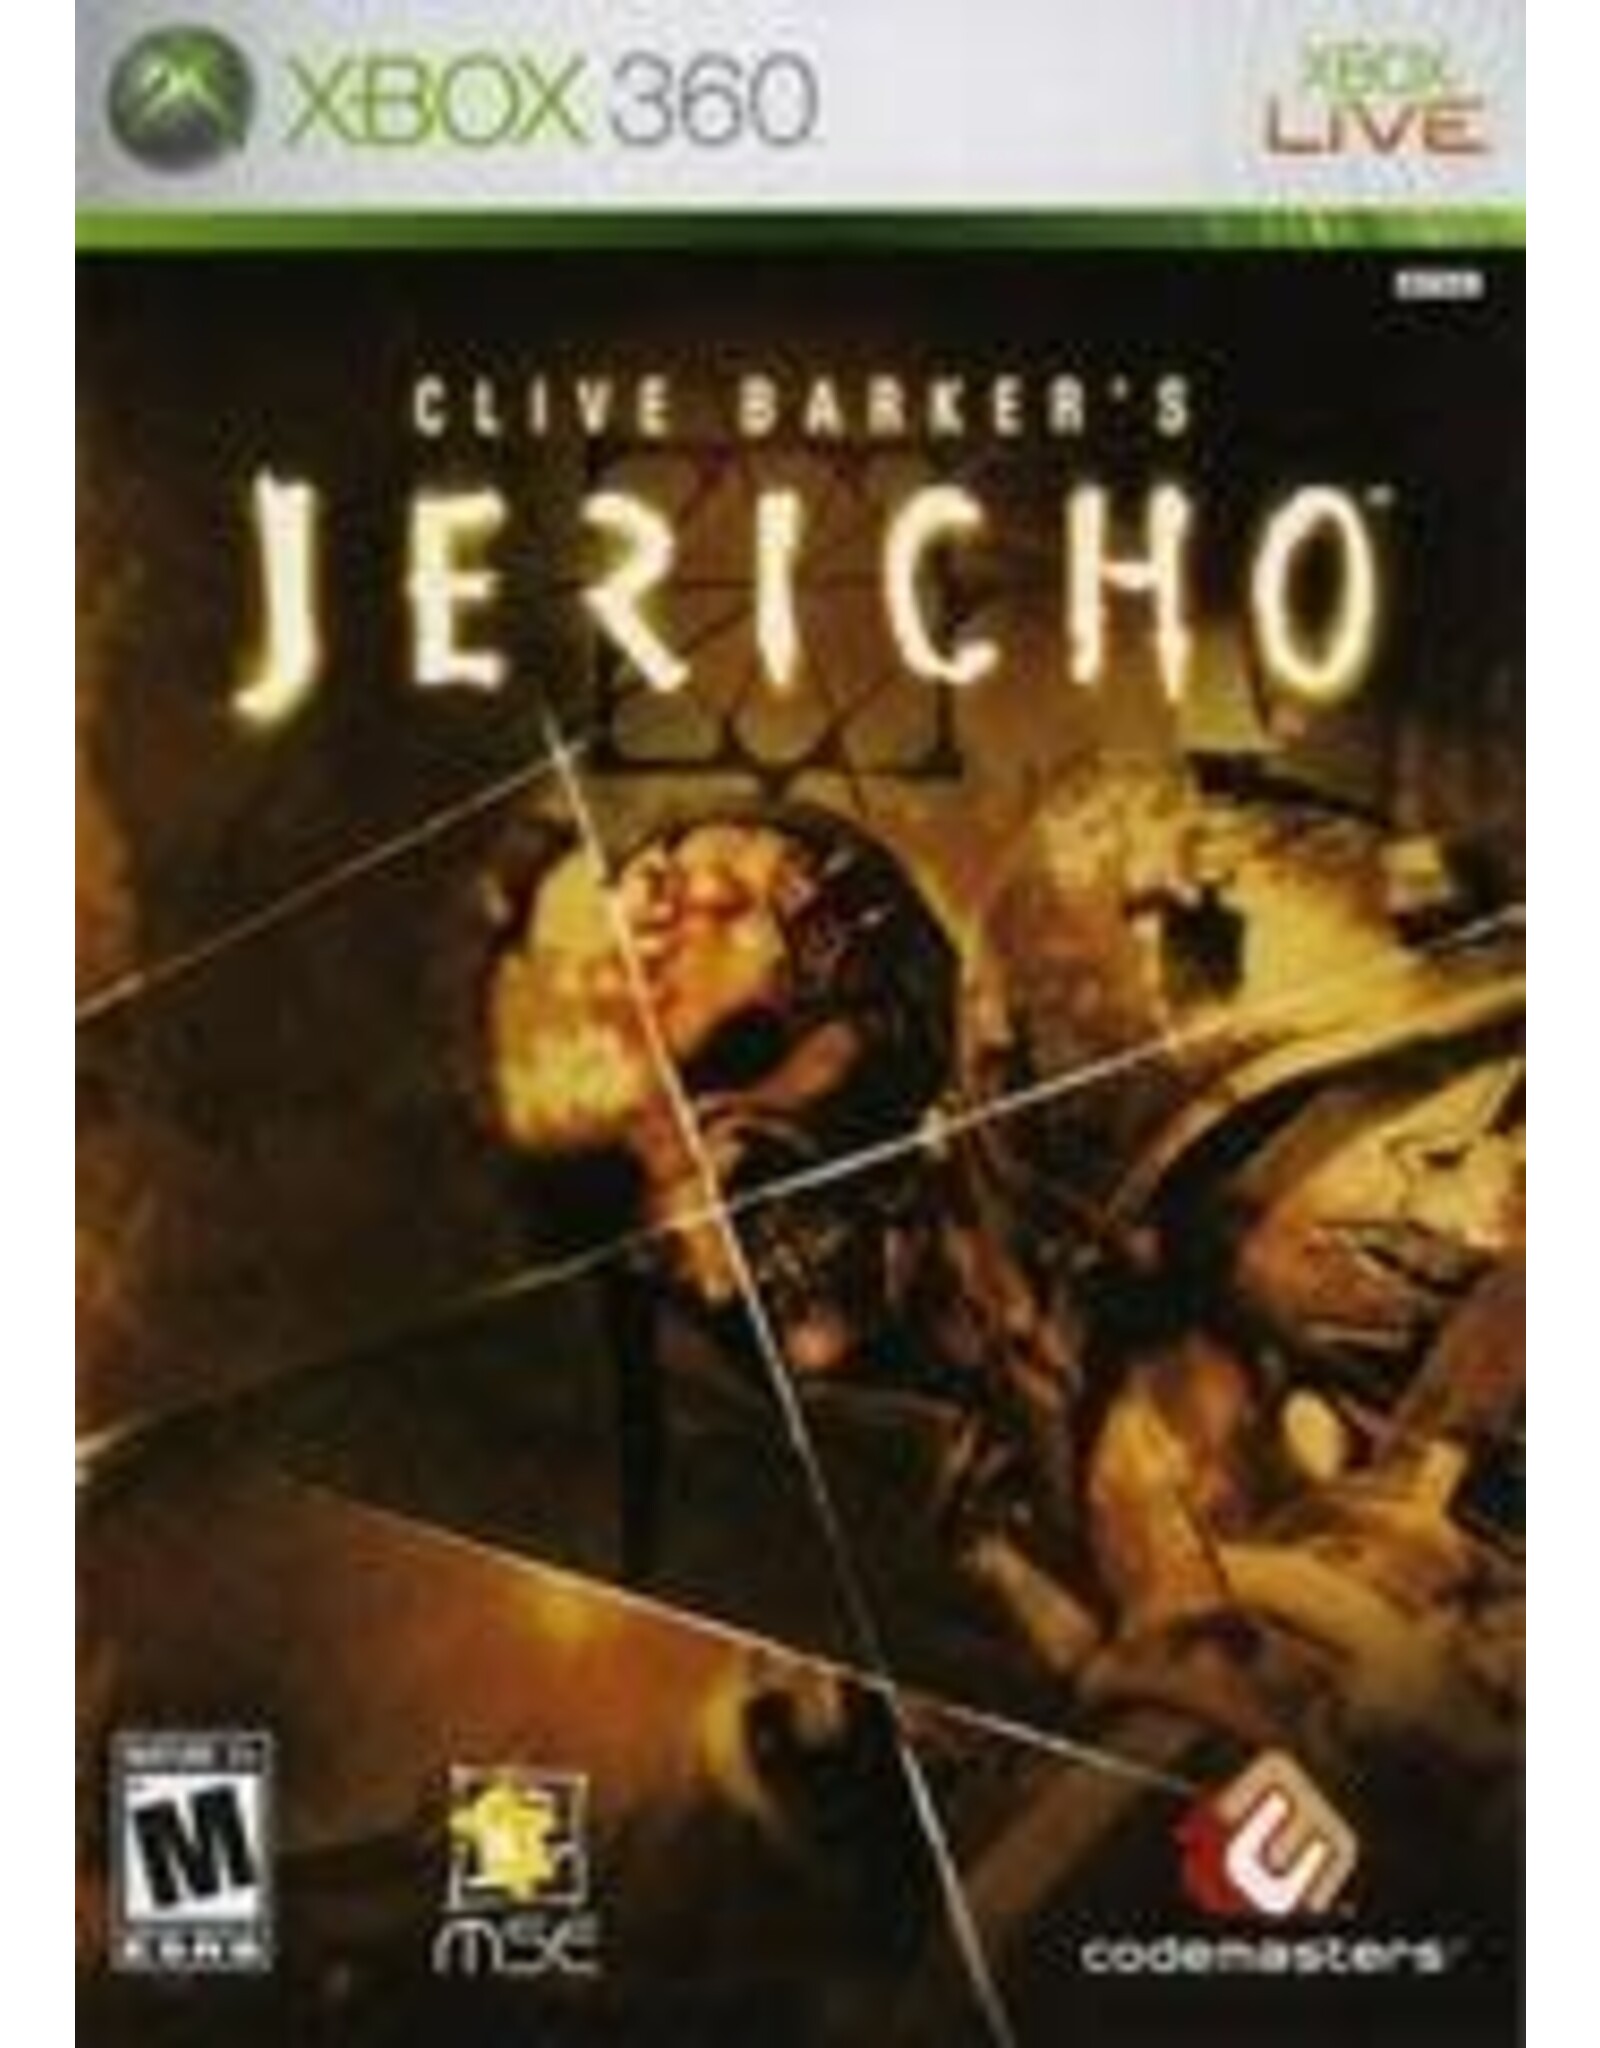 Xbox 360 Jericho (No Manual)